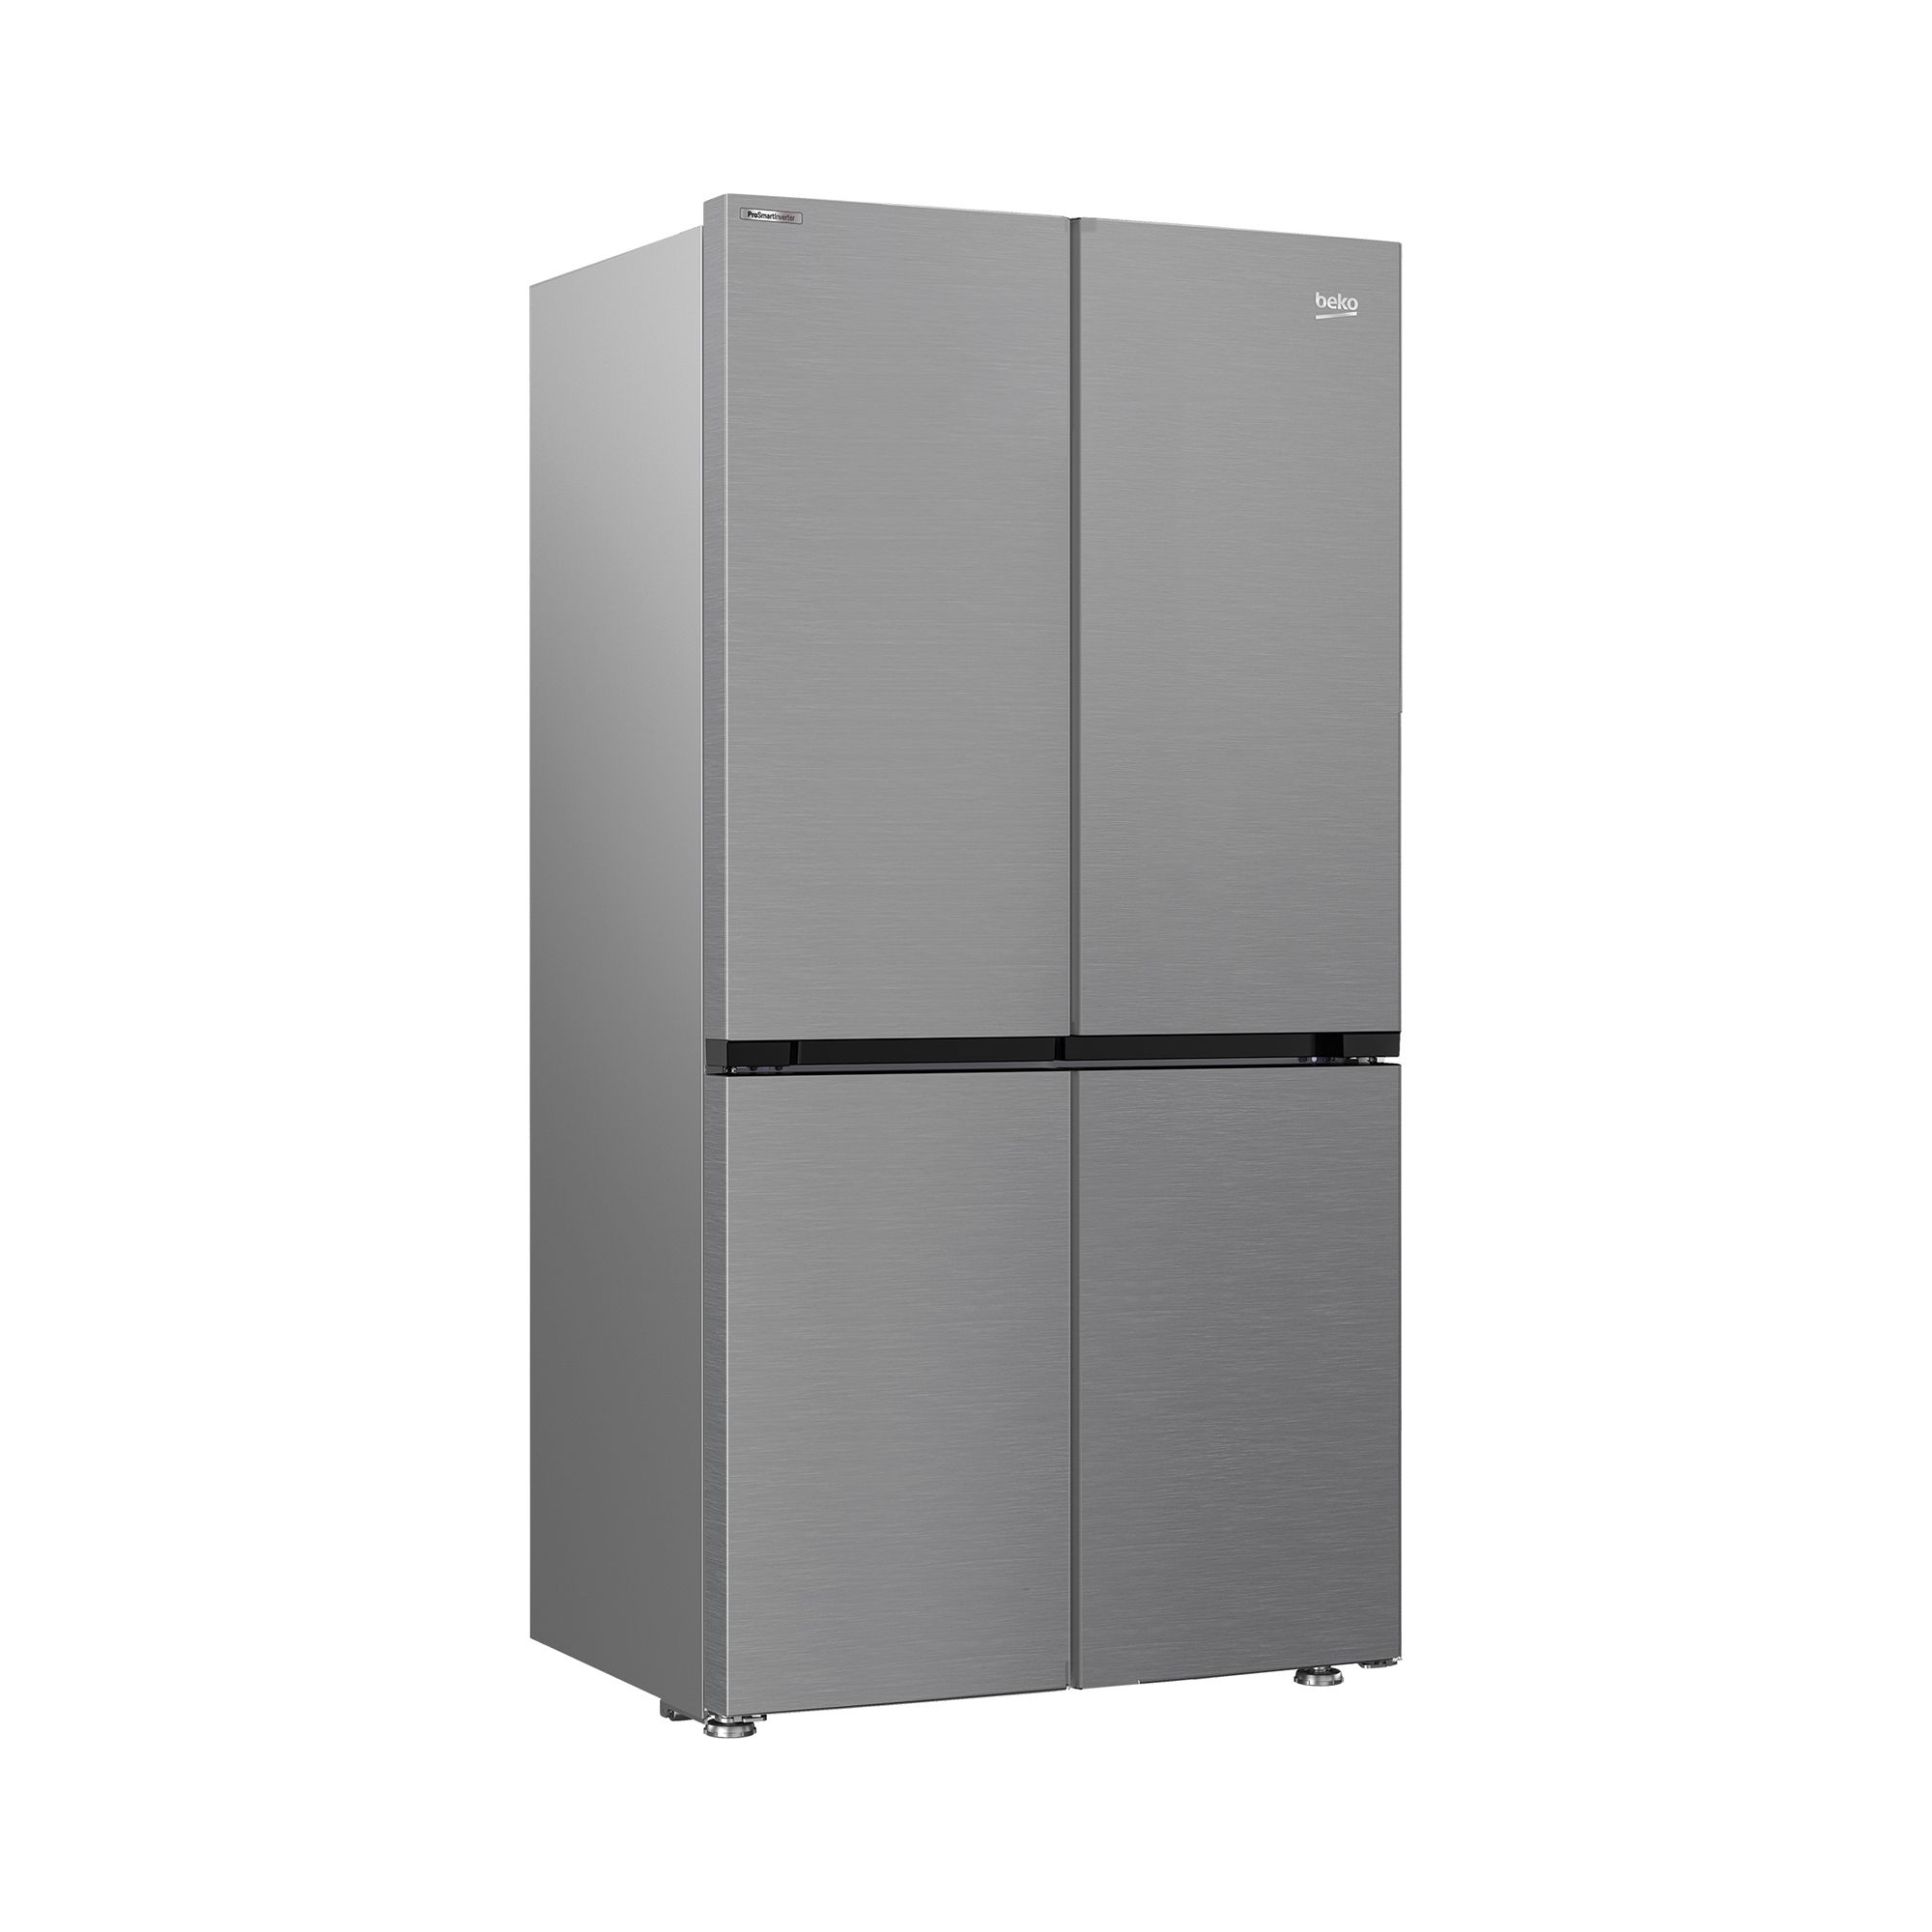 Beko GN446224VPS 50:50 American style Freestanding Frost free Fridge freezer